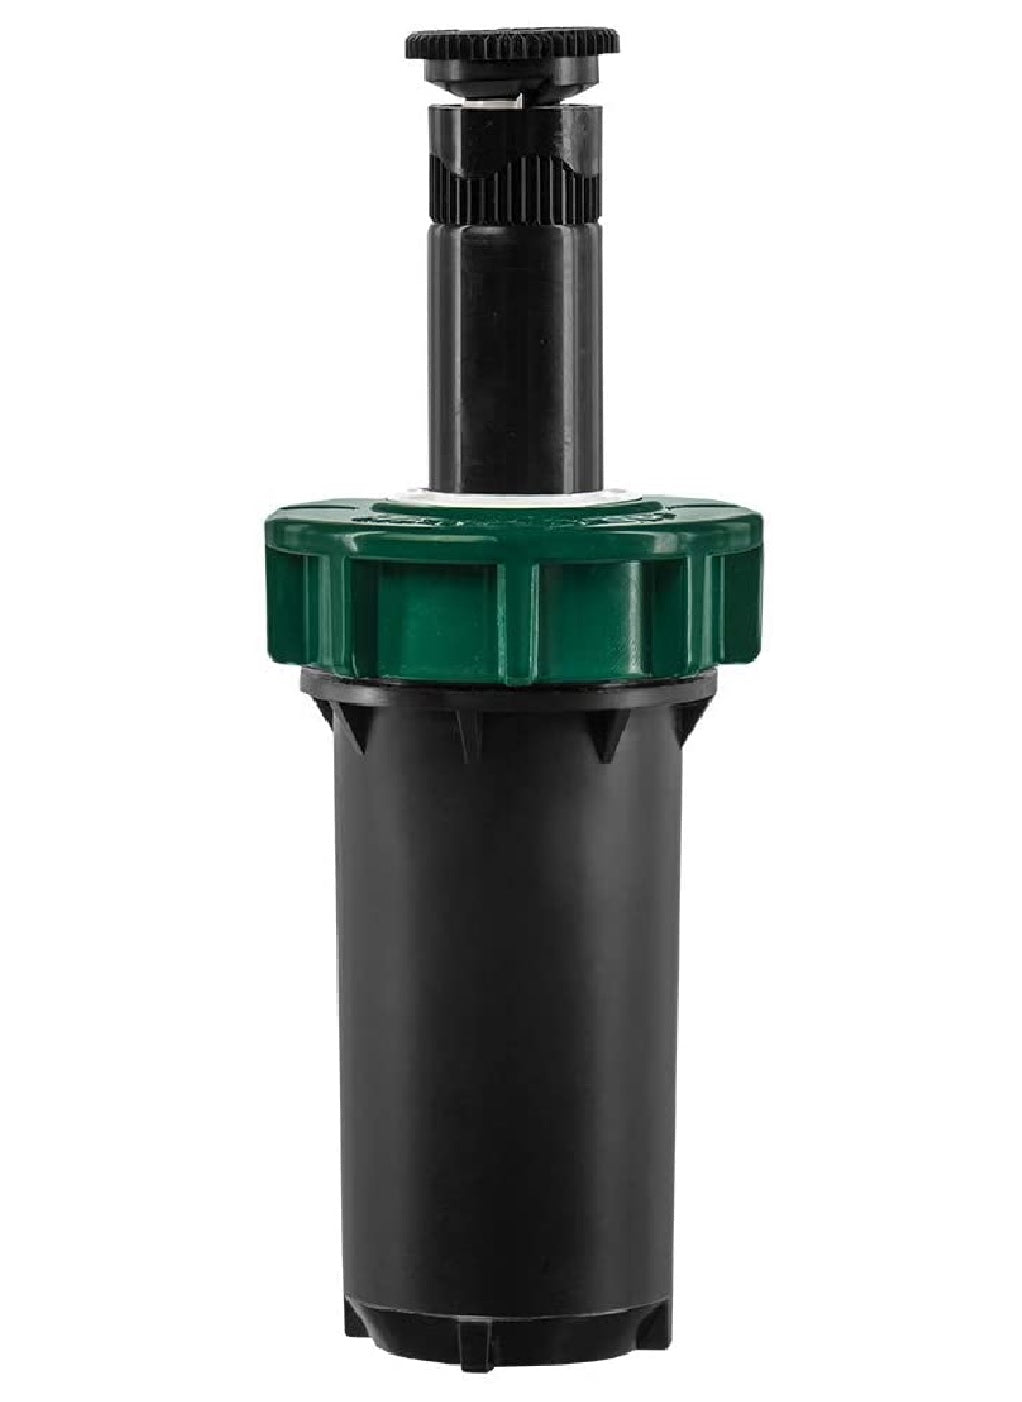 Orbit 54500 Professional Hard-Top Sprinkler Head, 2 Inch